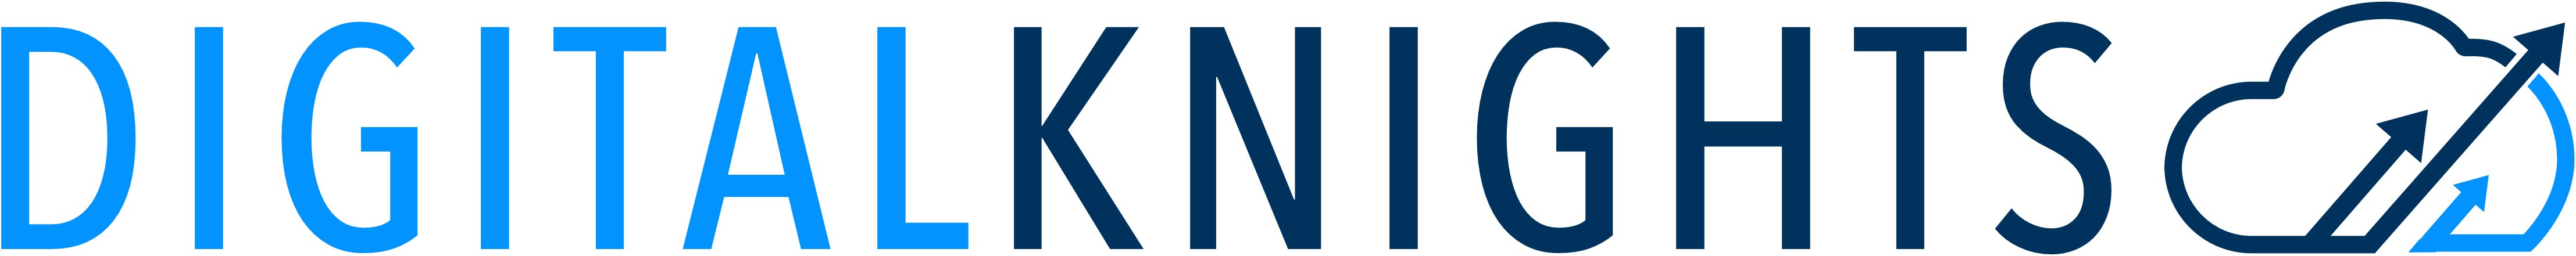 Logo Digital Knights Blue